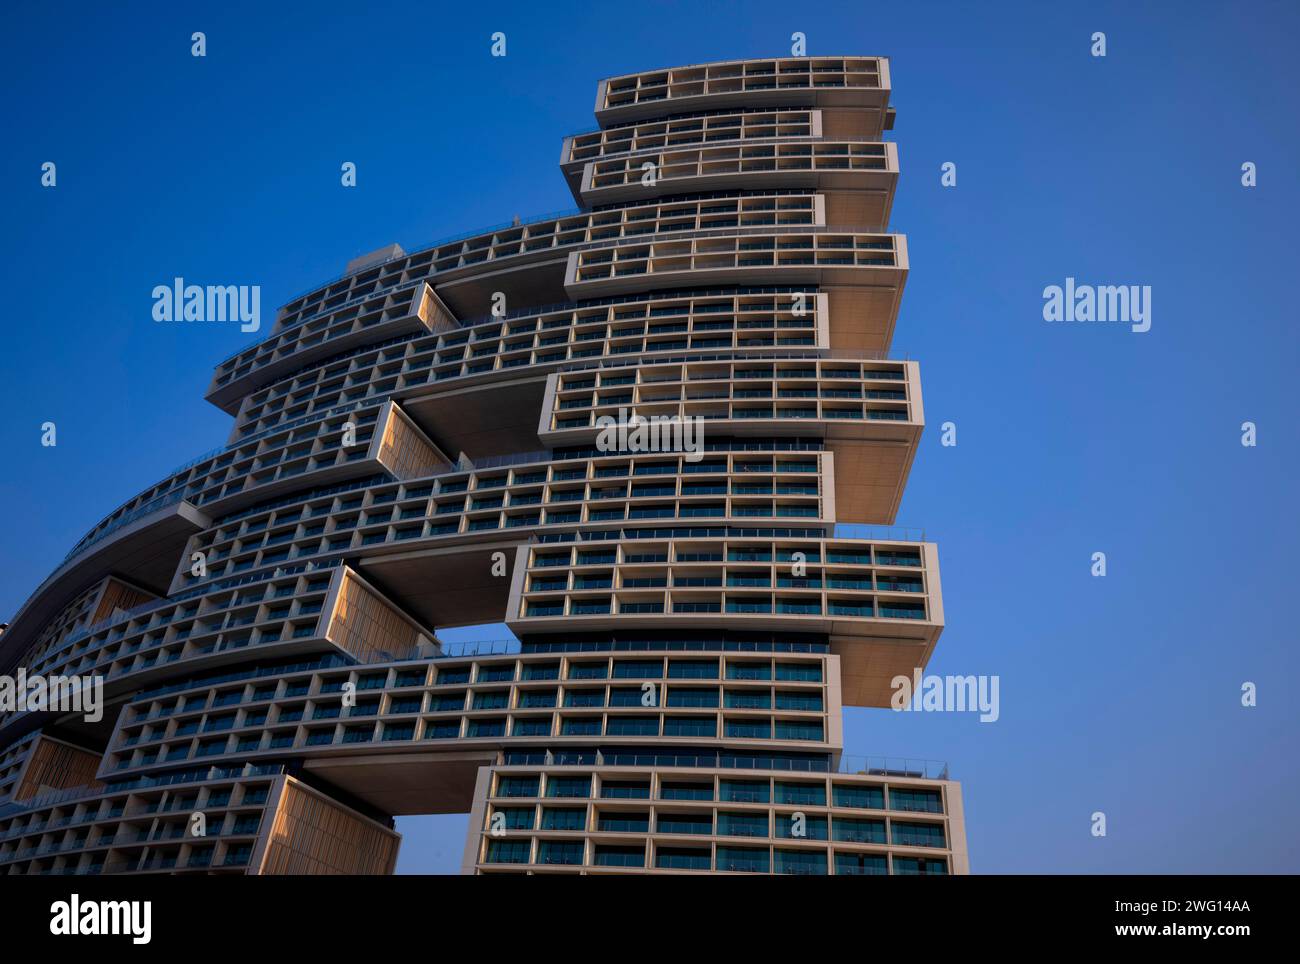 Hotel Atlantis The Royal, The Palm Jumeirah, Dubai, United Arab Emirates, VAR Stock Photo